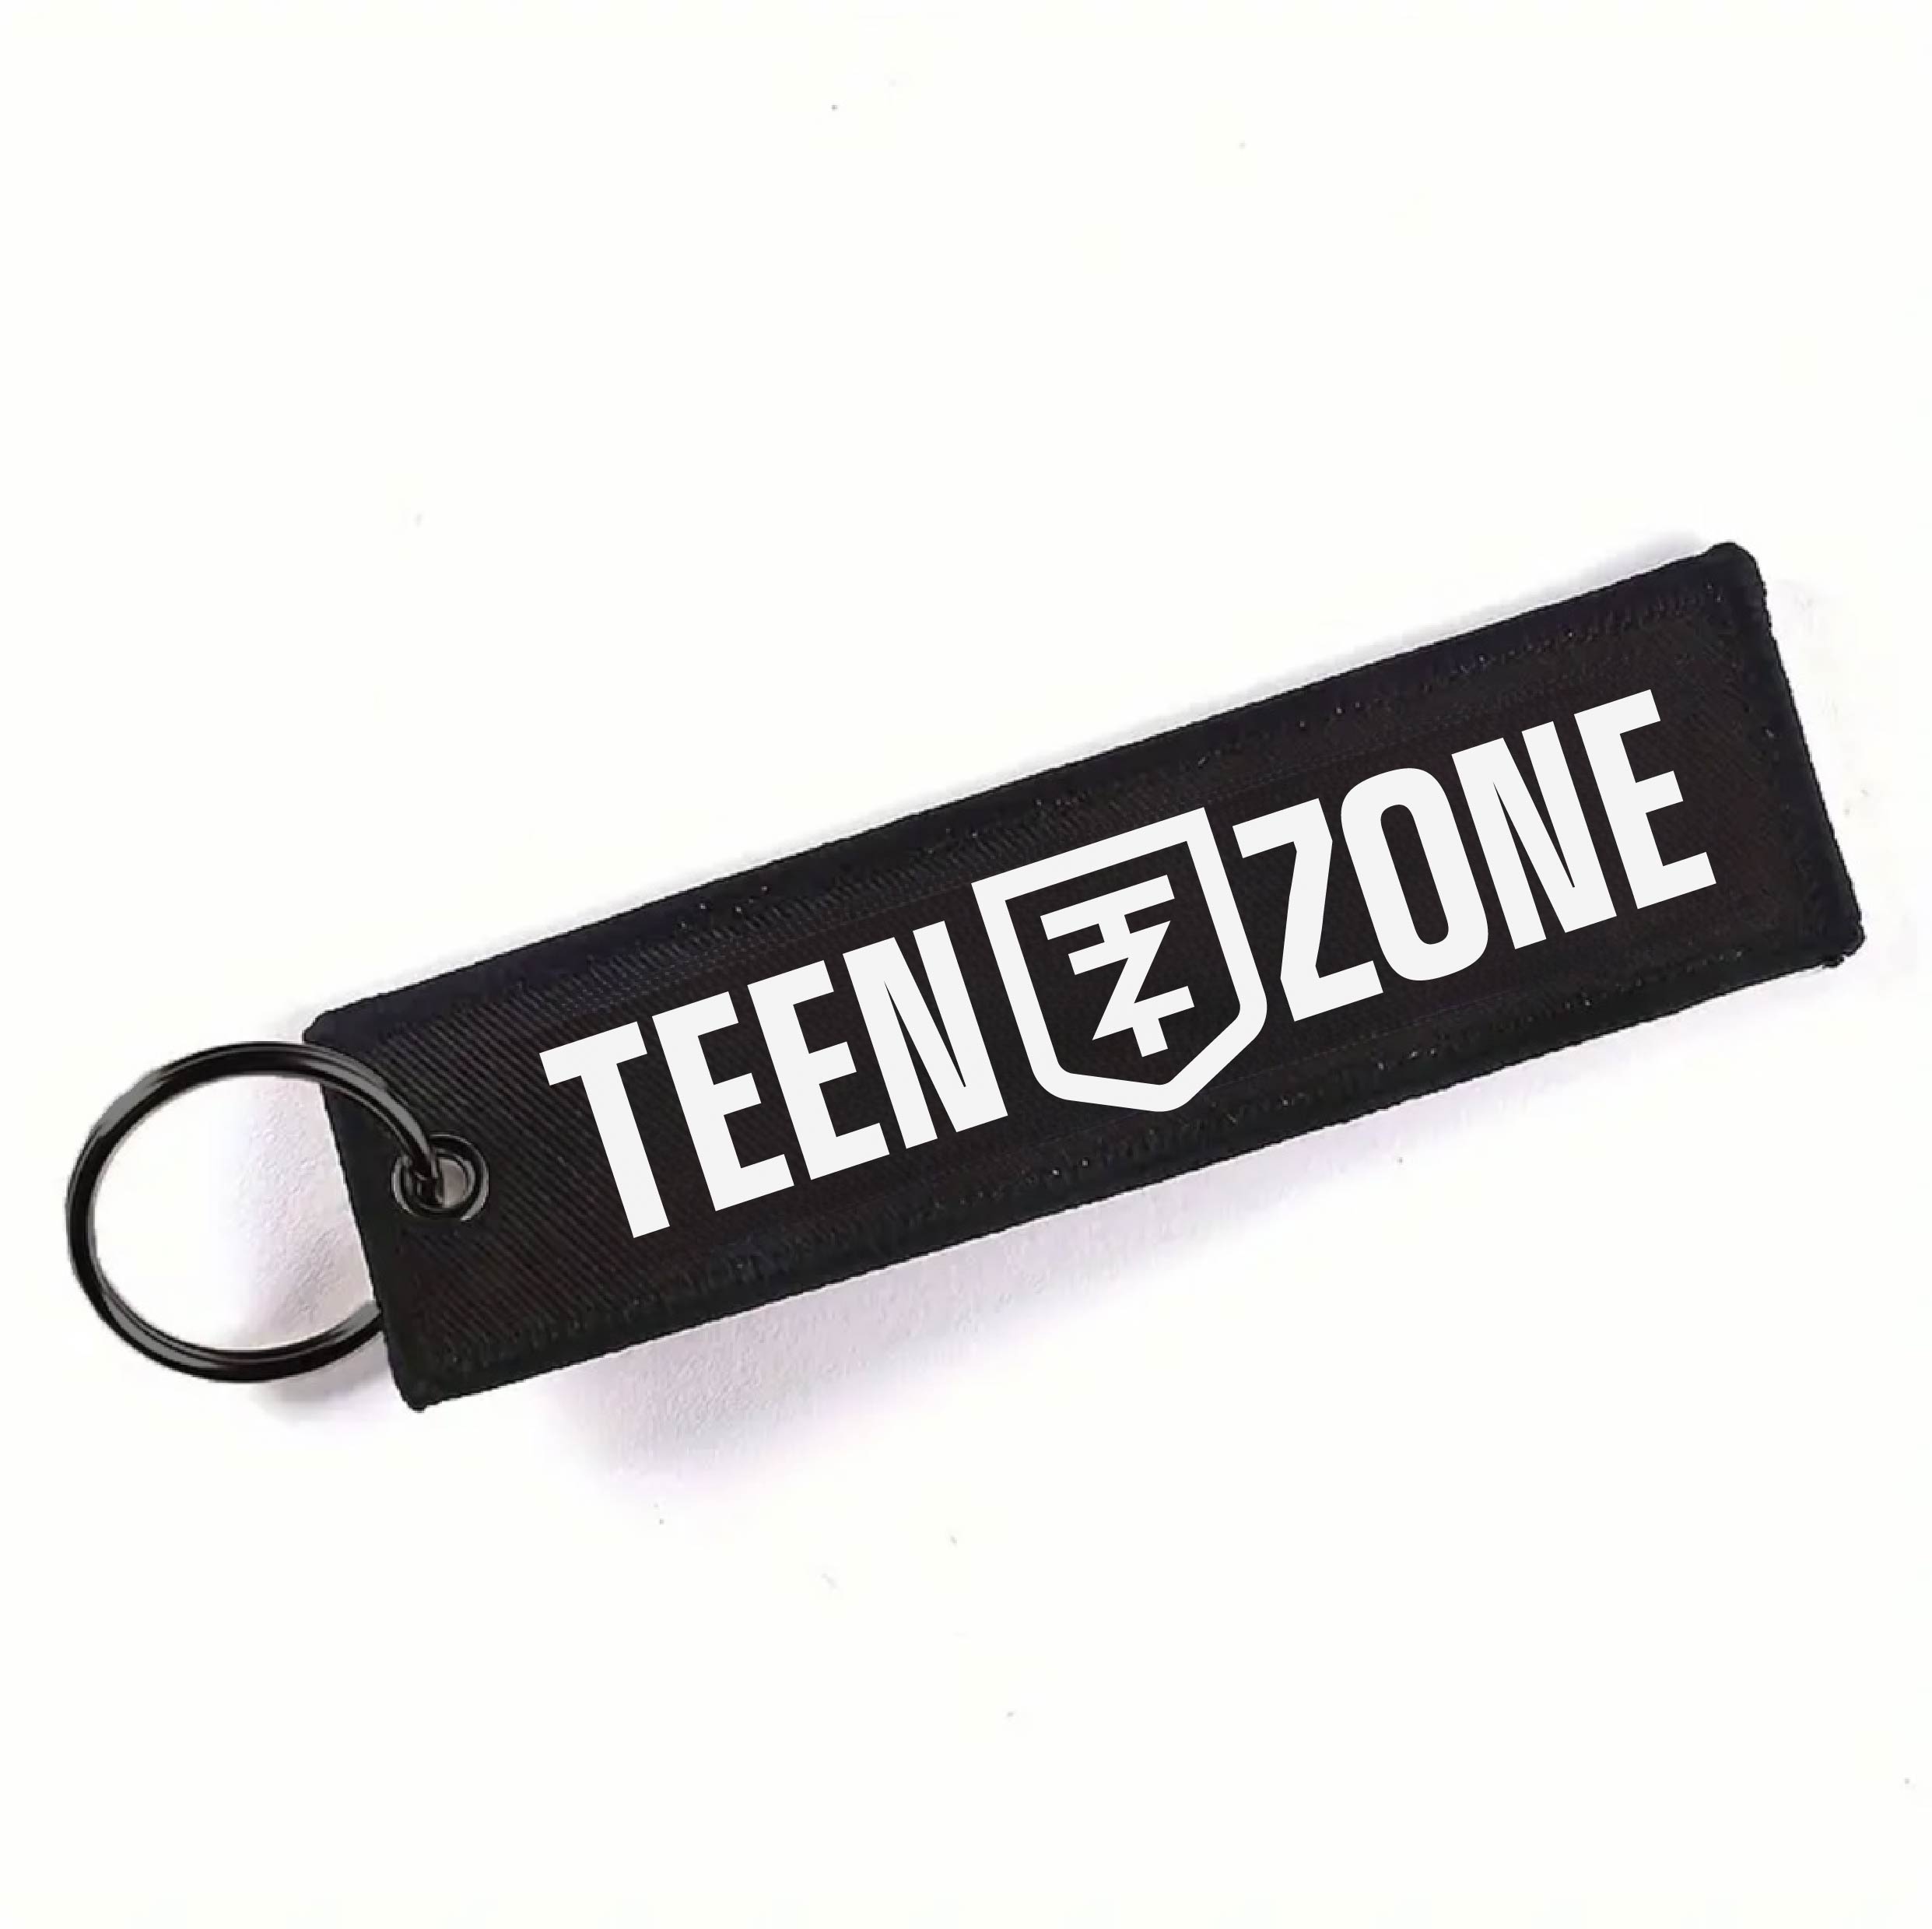 Sleutelhanger Teenzone